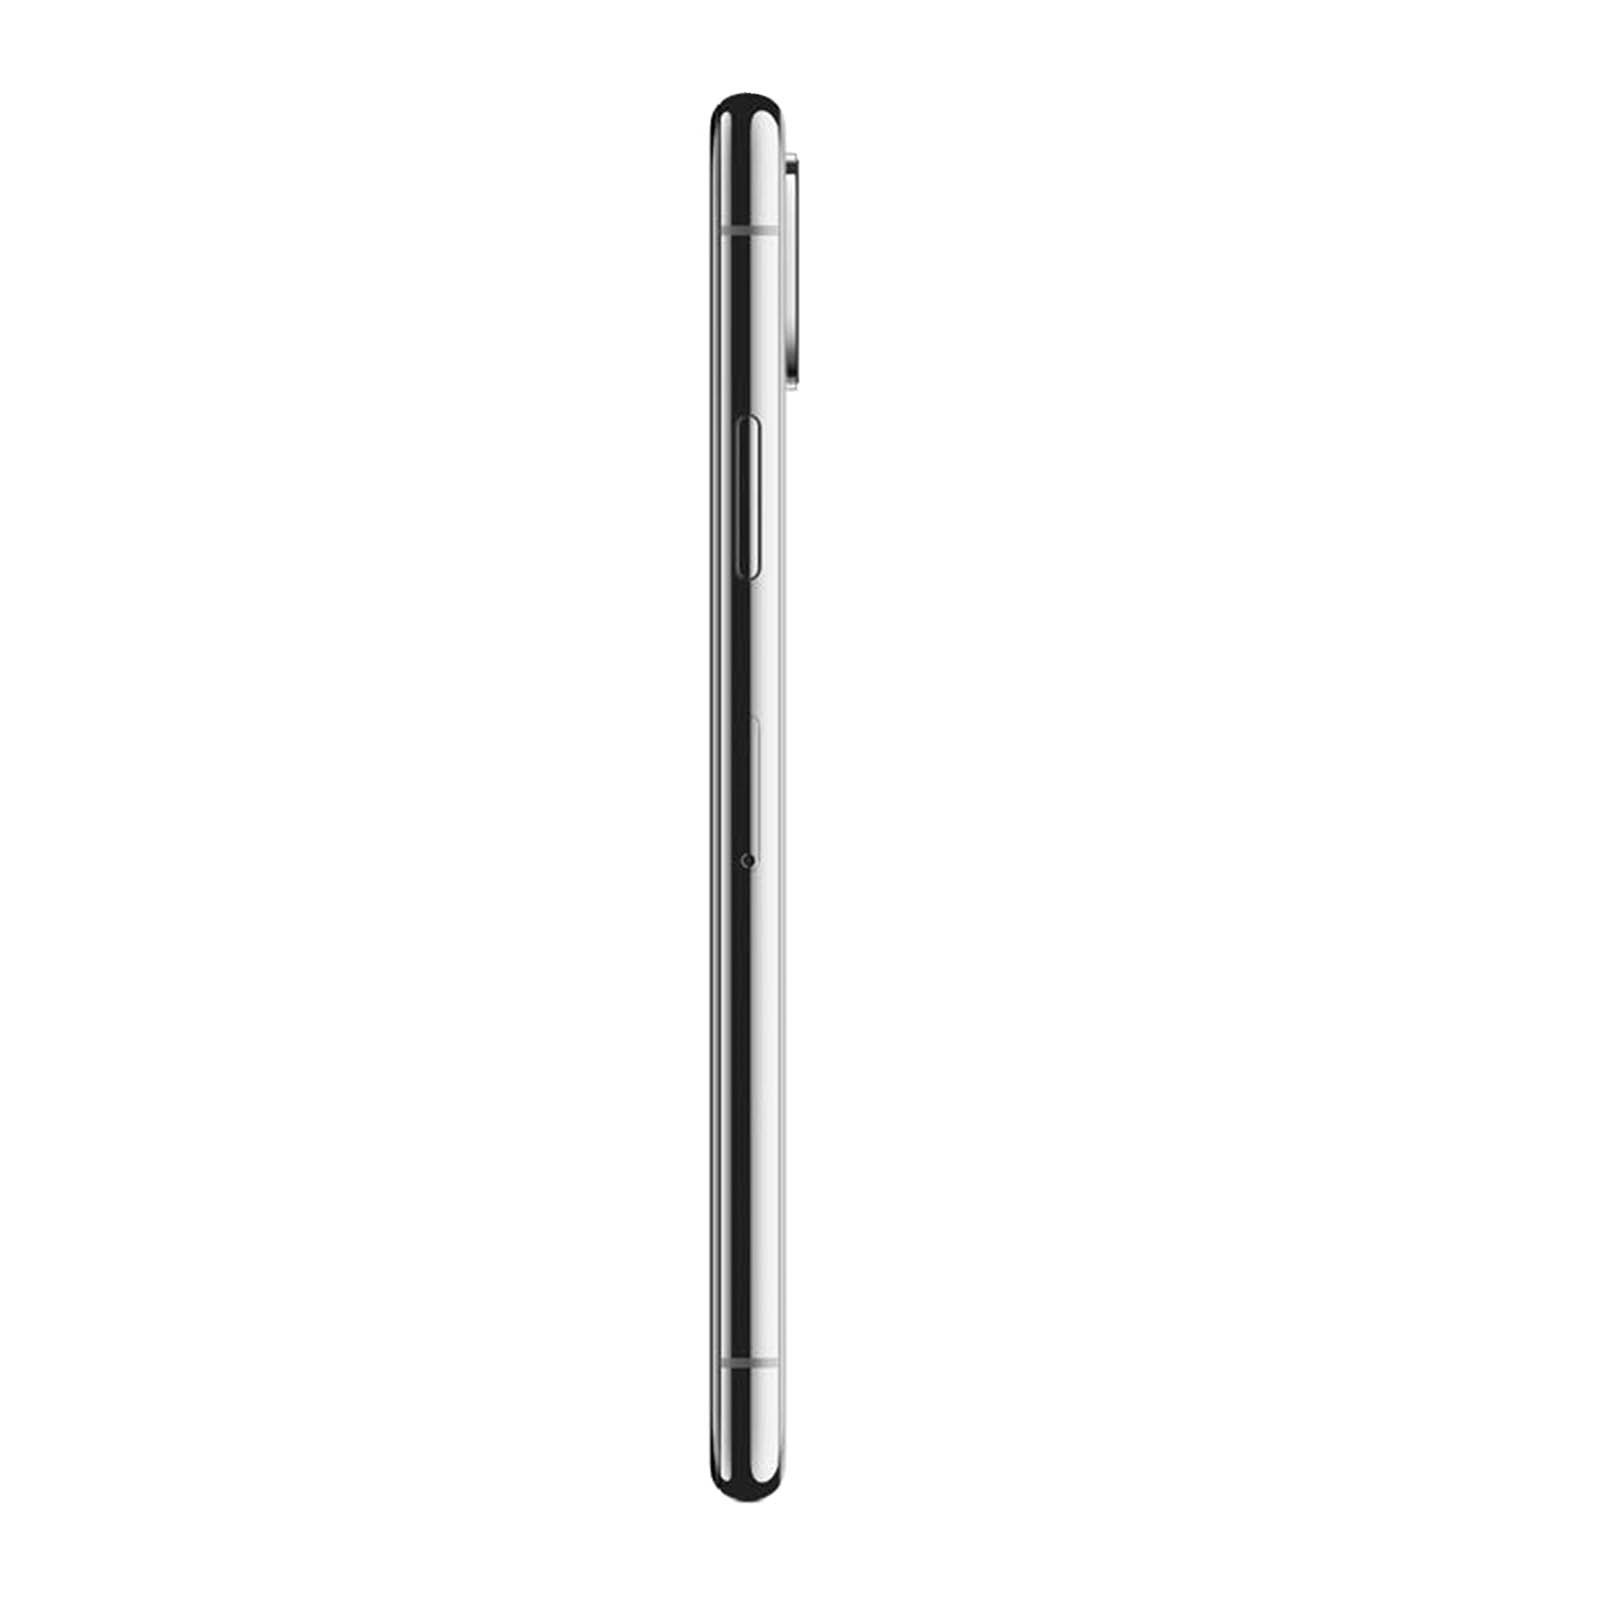 Apple iPhone XS 64GB Silver Good - Unlocked